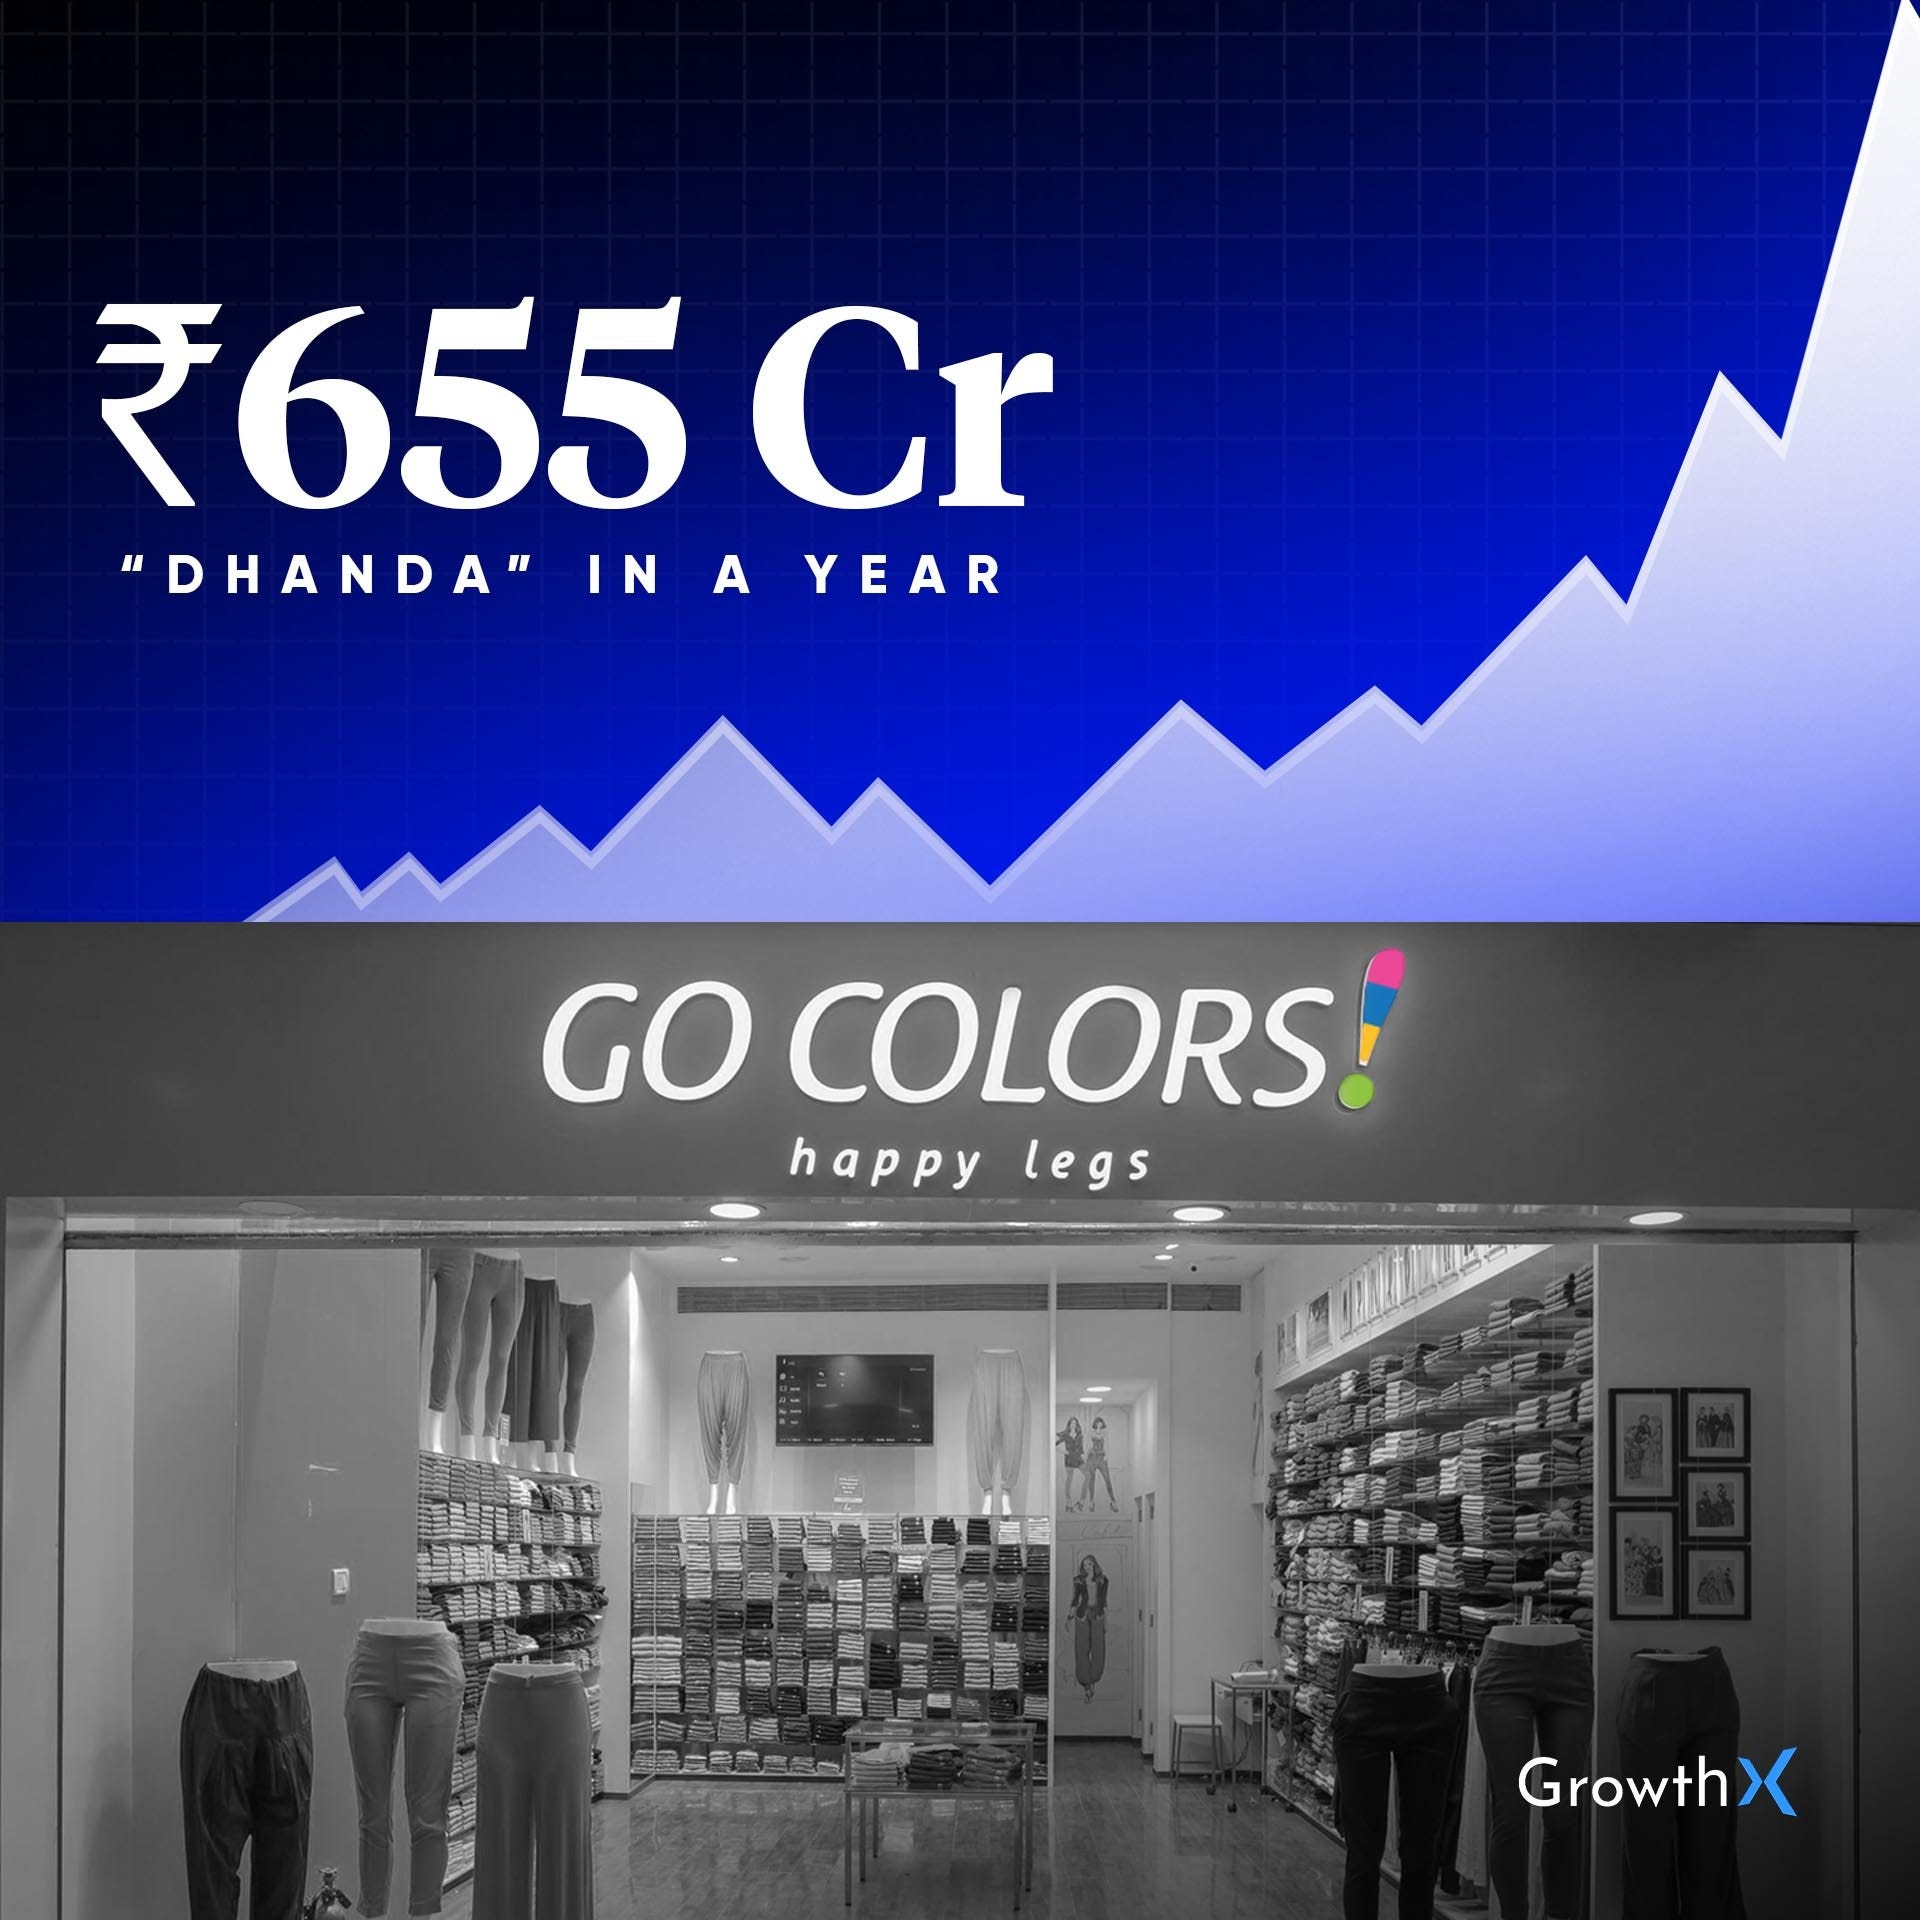 How GoColors built a ₹655 Cr dhanda? 🤯